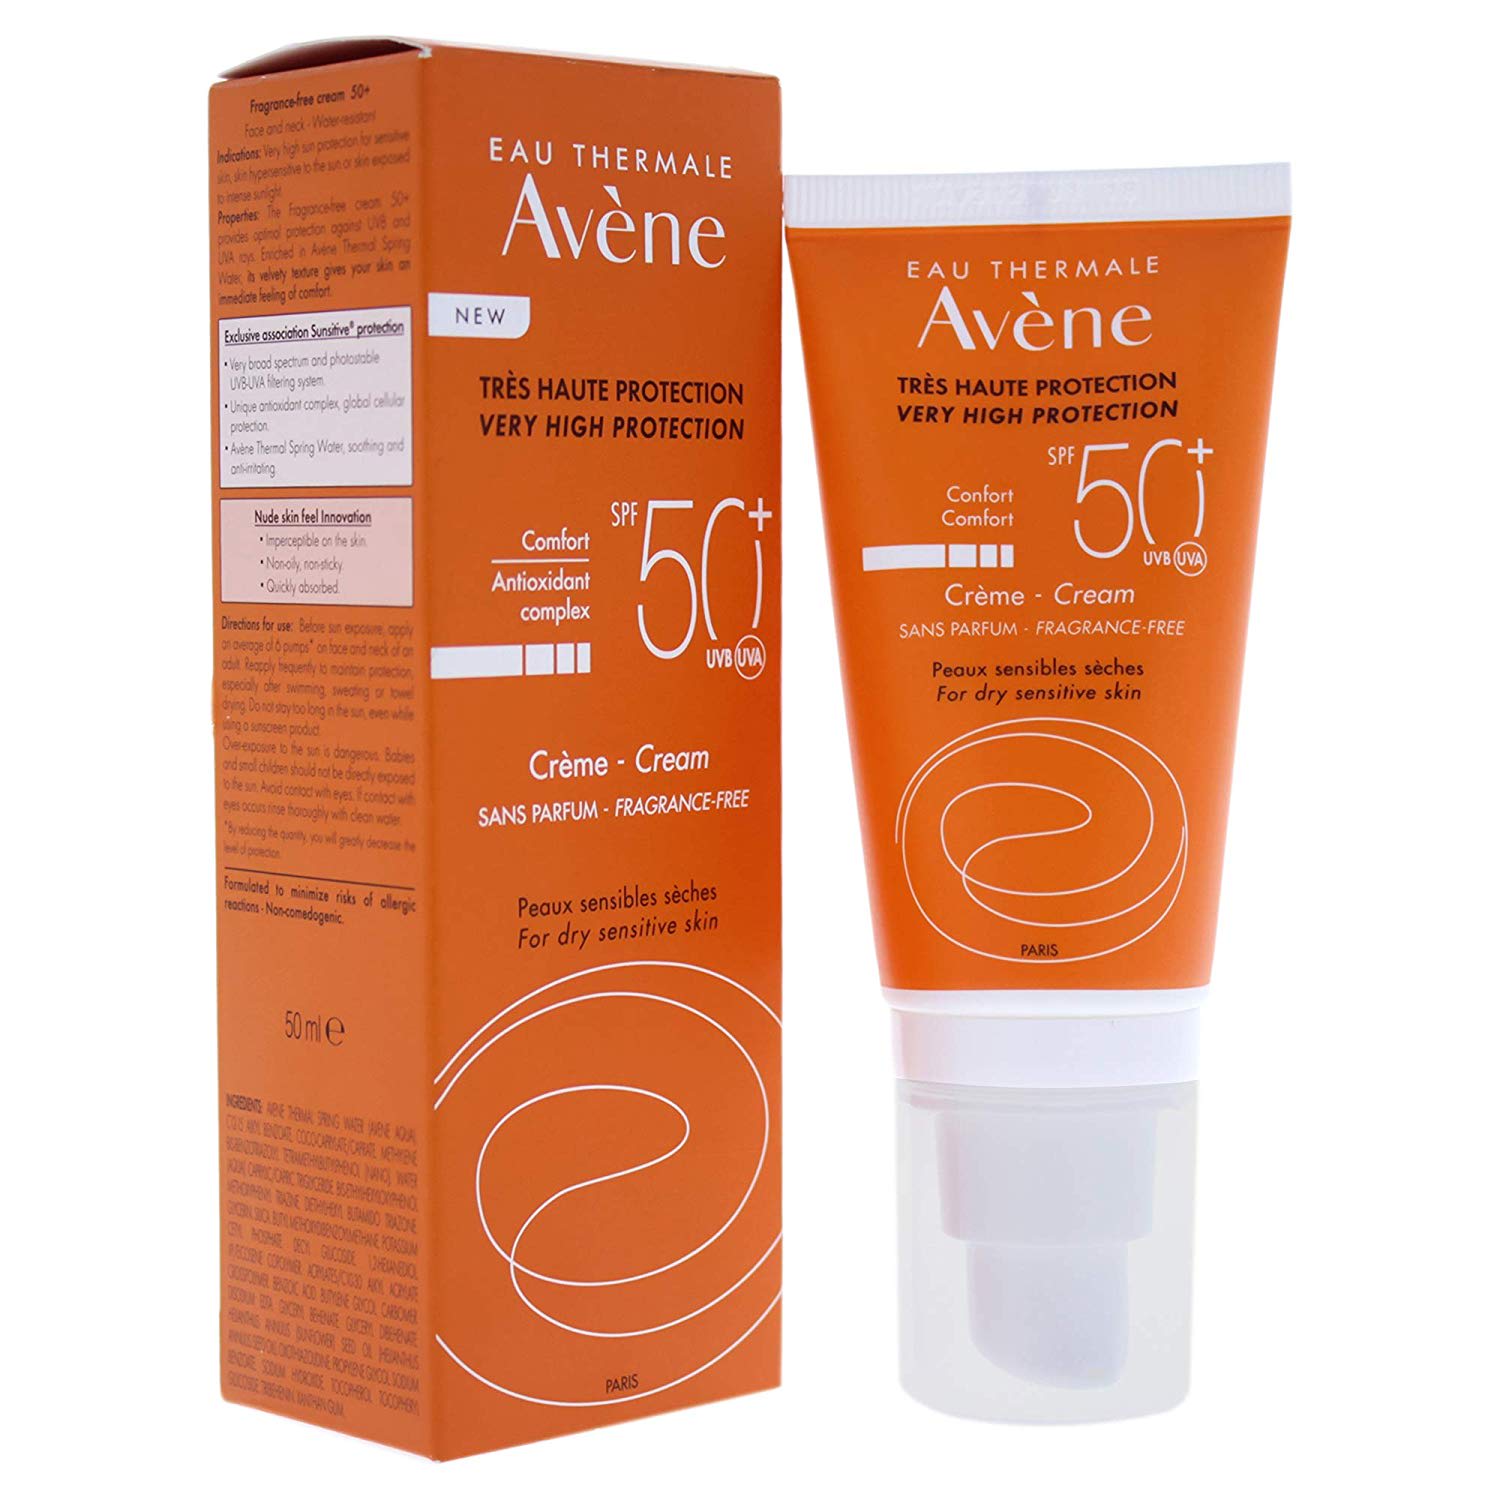 Avene SPF 50+ Tinted Cream - 5